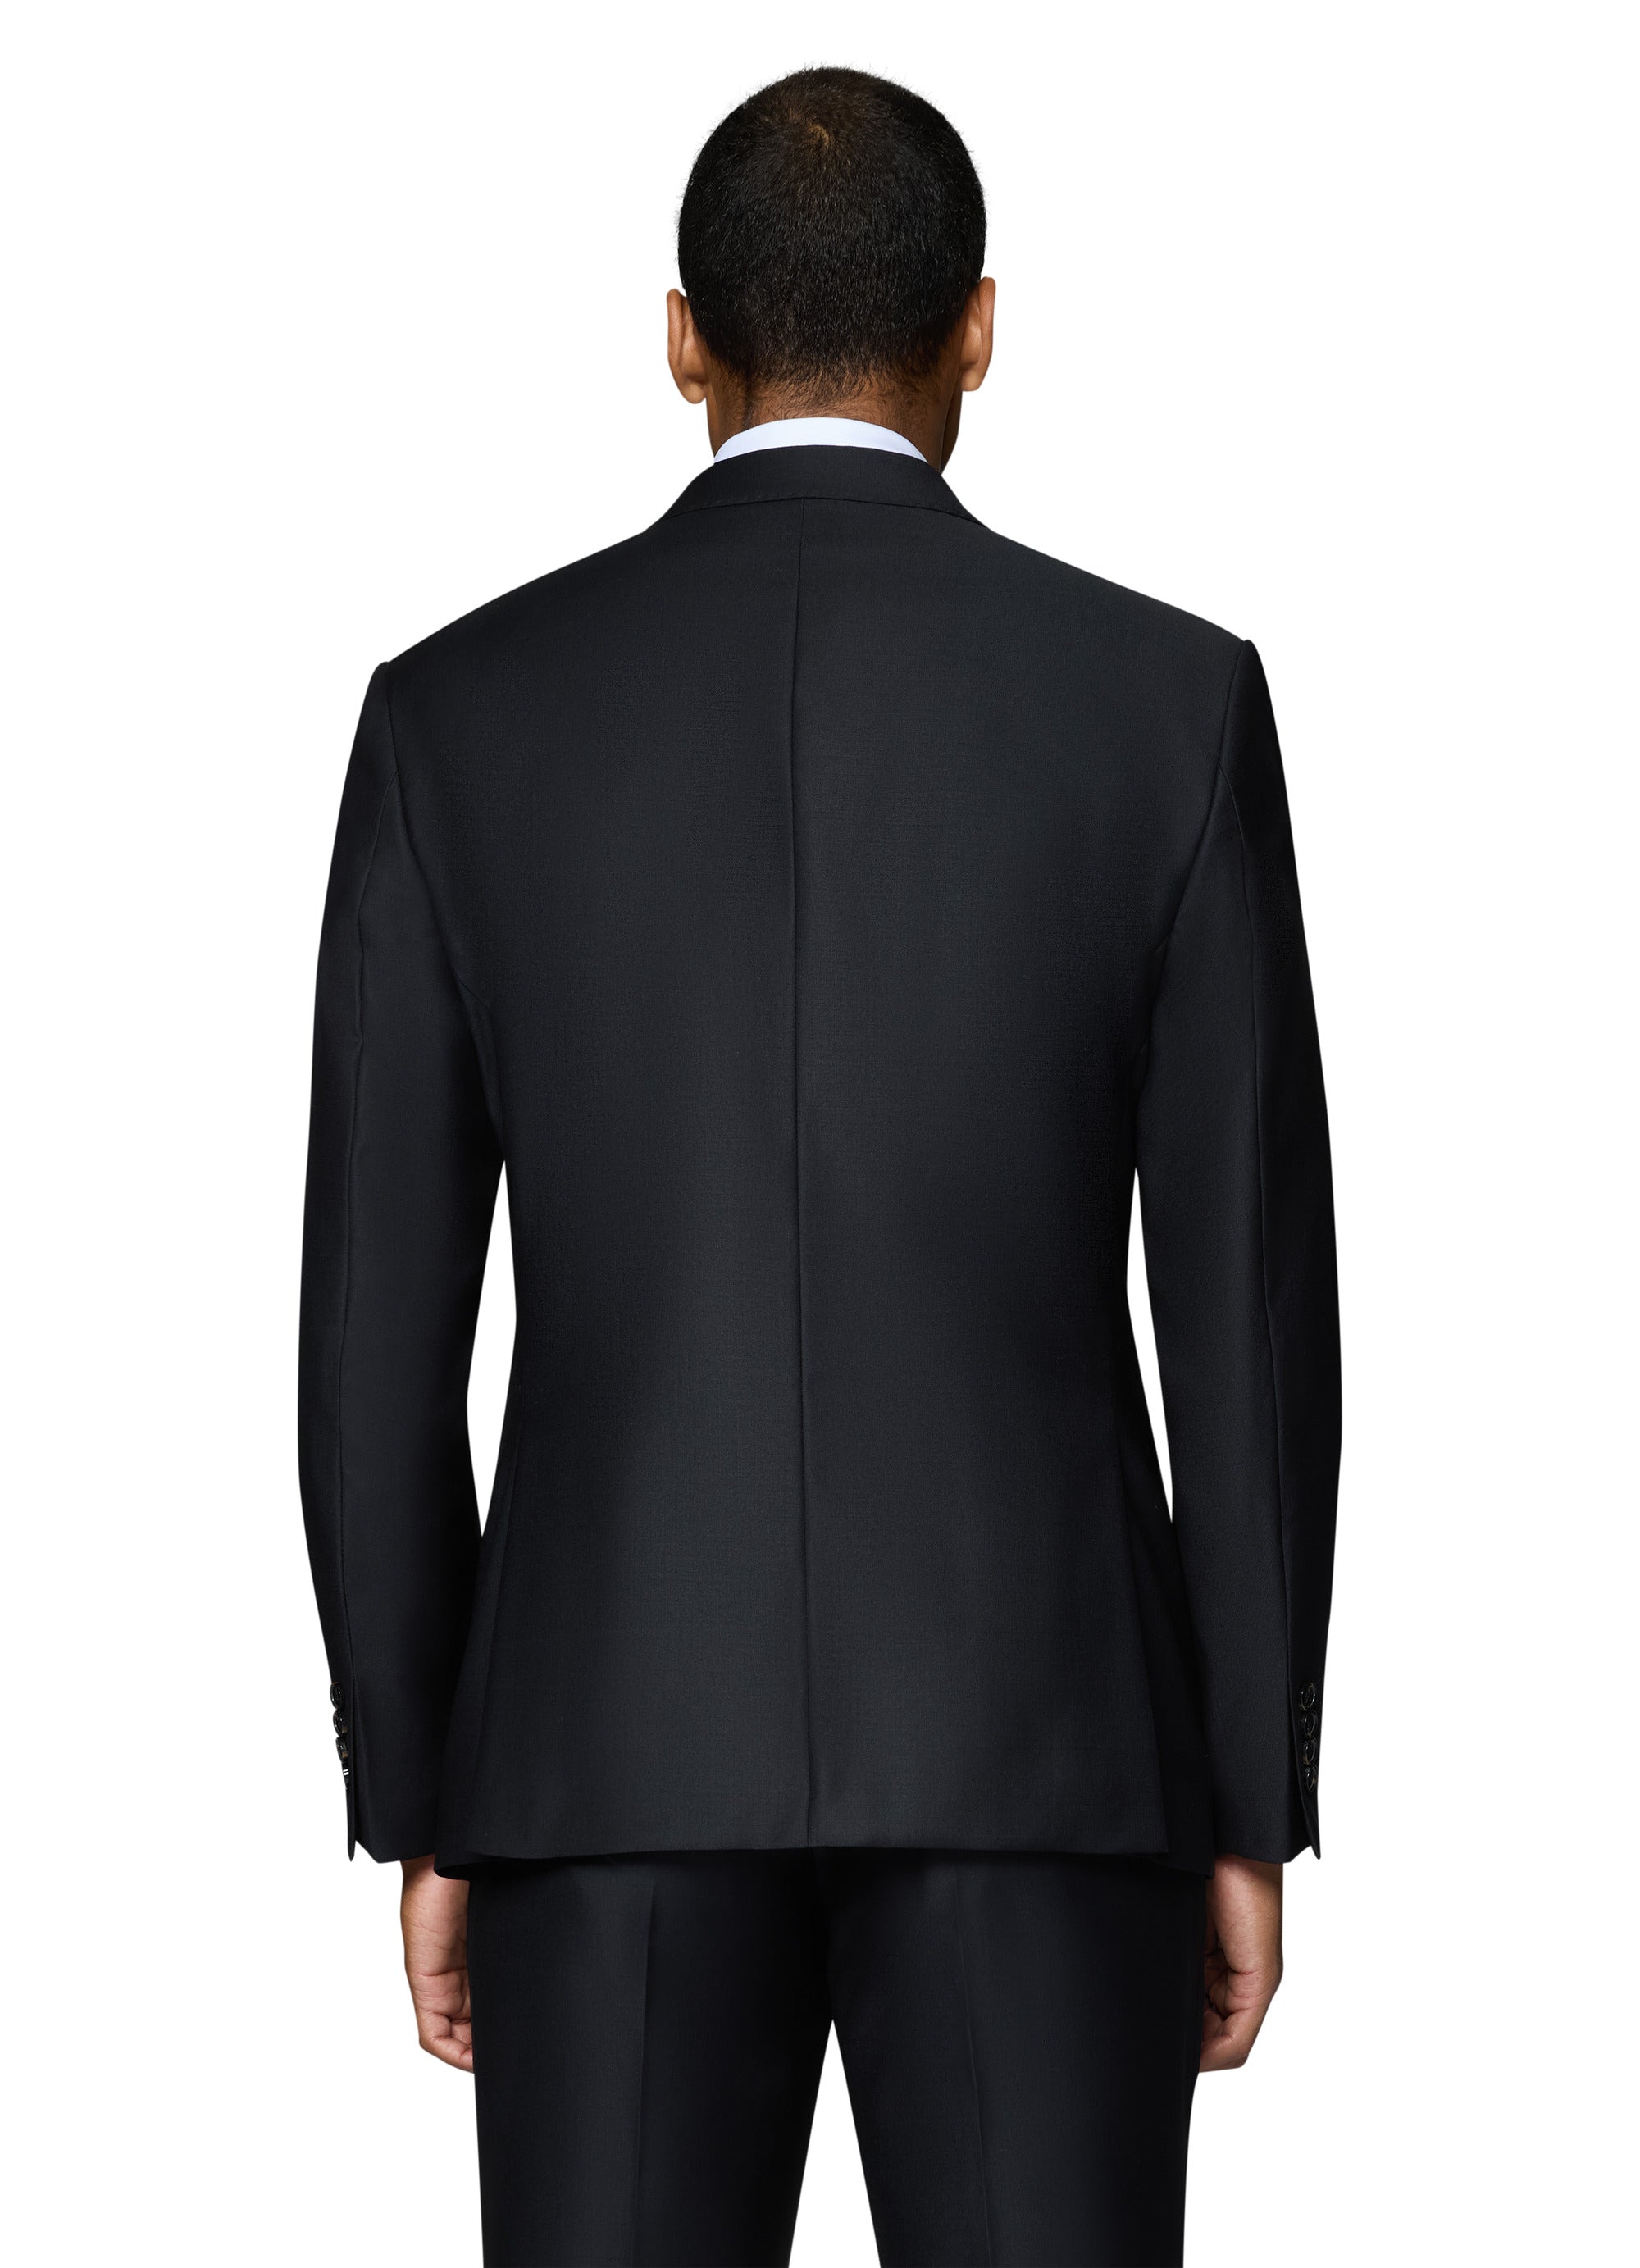 Berragamo - Reda | Modern 2-Piece Notch Solid Black Suit